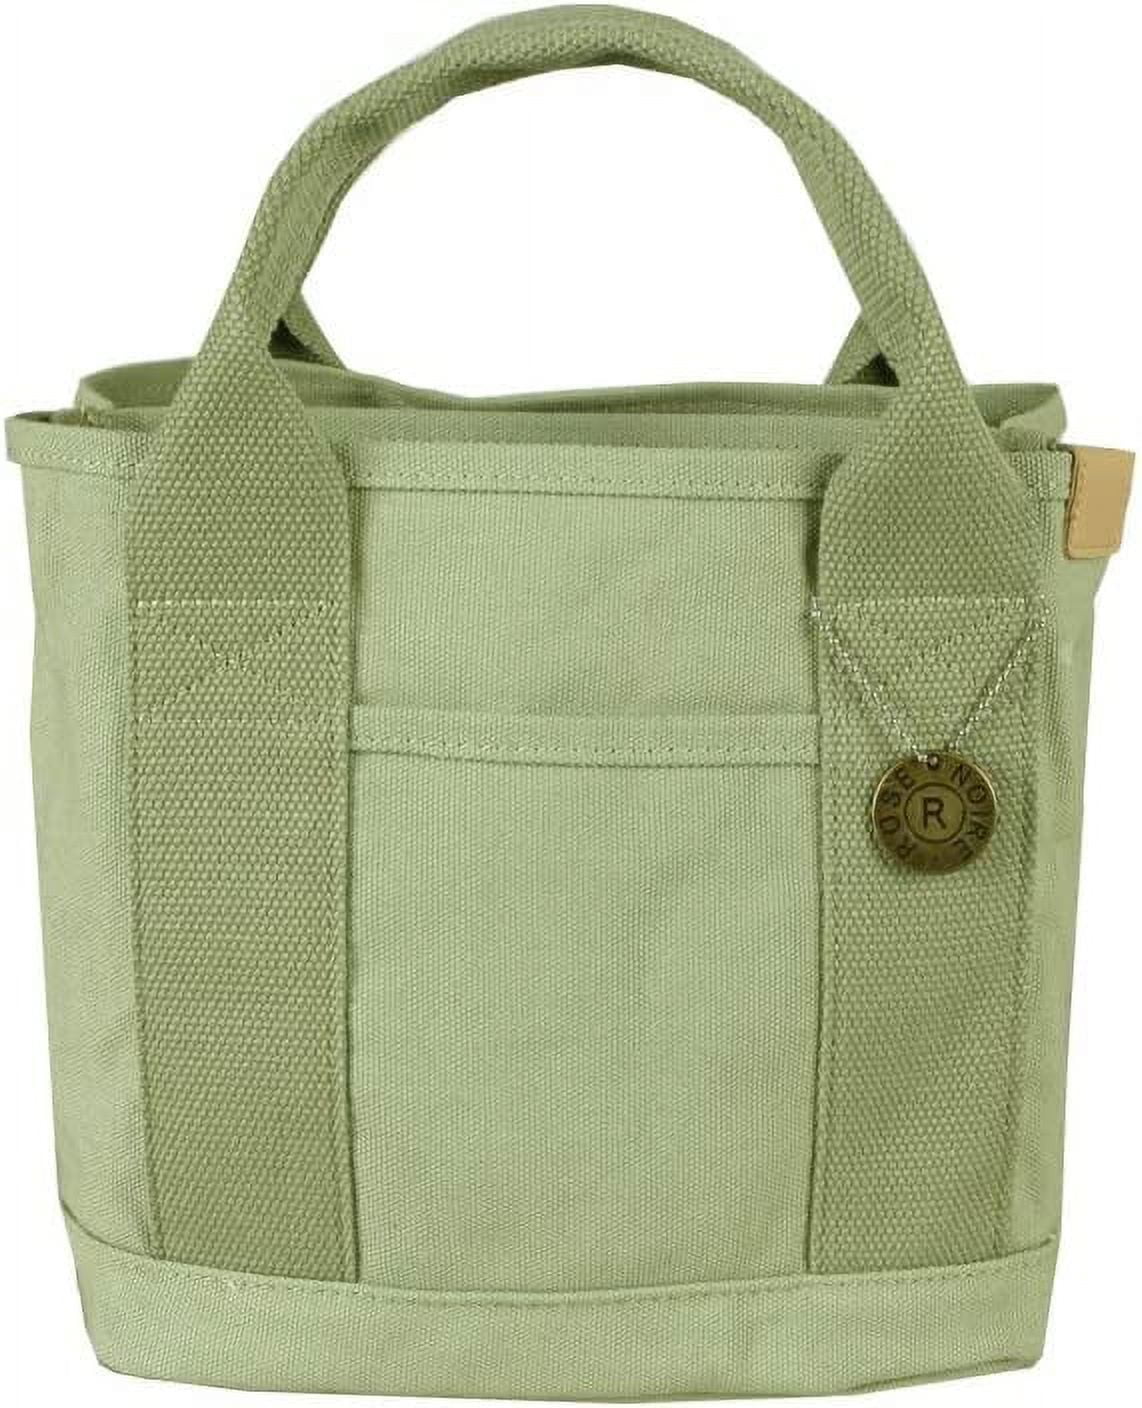 Customized】Embroidered face-painted bag/lunch bag/handbag/tote bag/canvas  bag - Shop Toheartworld custom made Handbags & Totes - Pinkoi